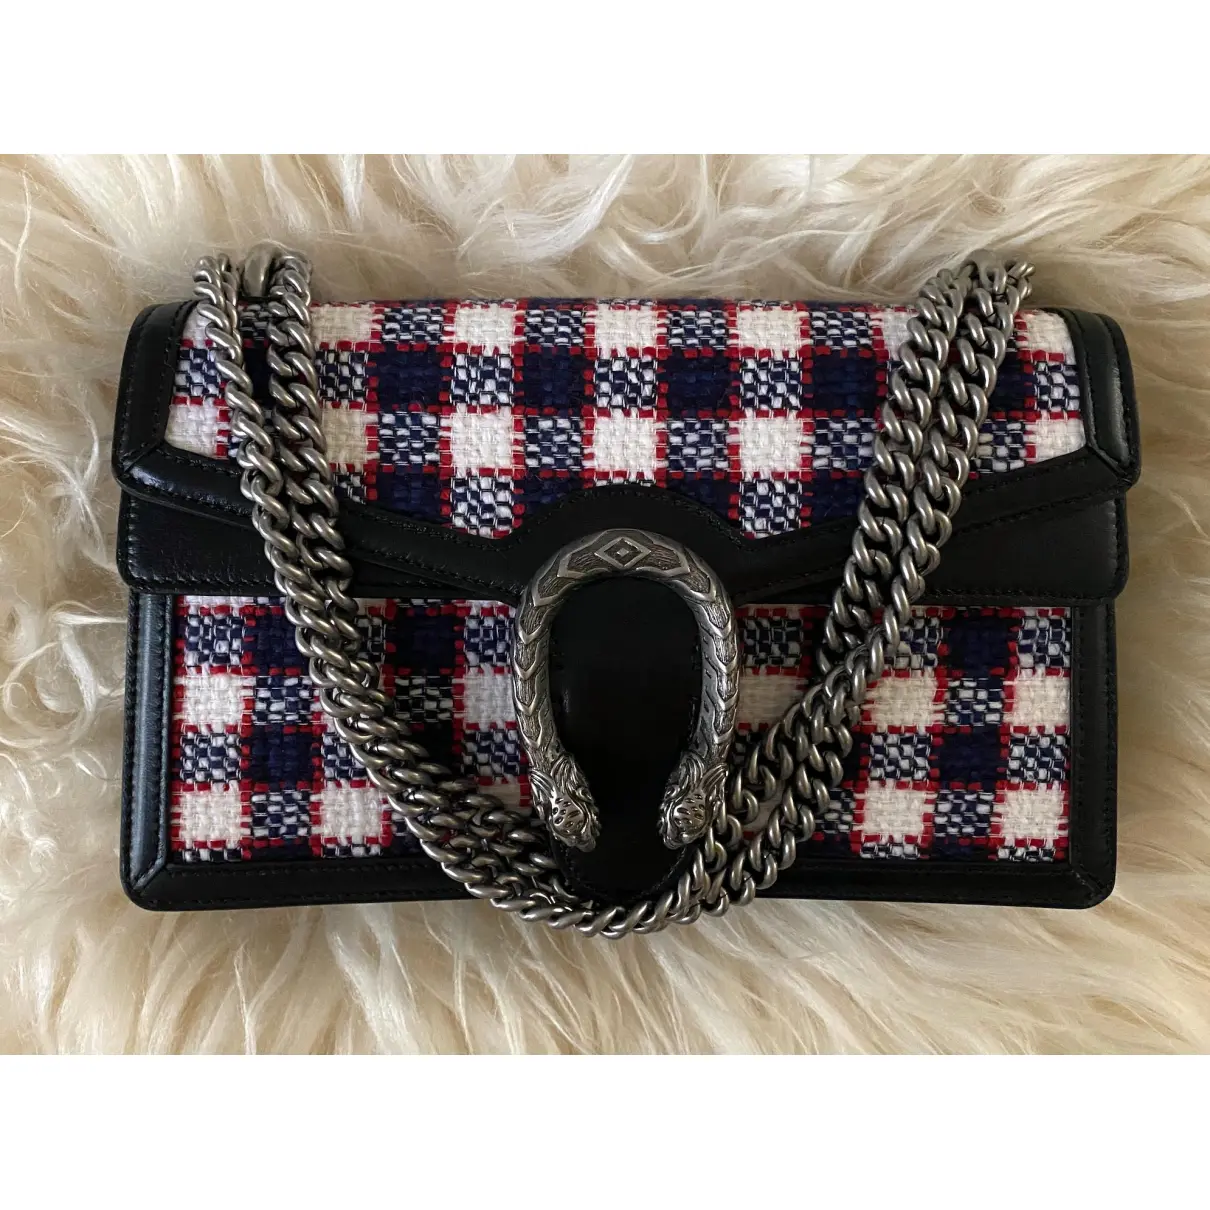 Dionysus cloth handbag Gucci